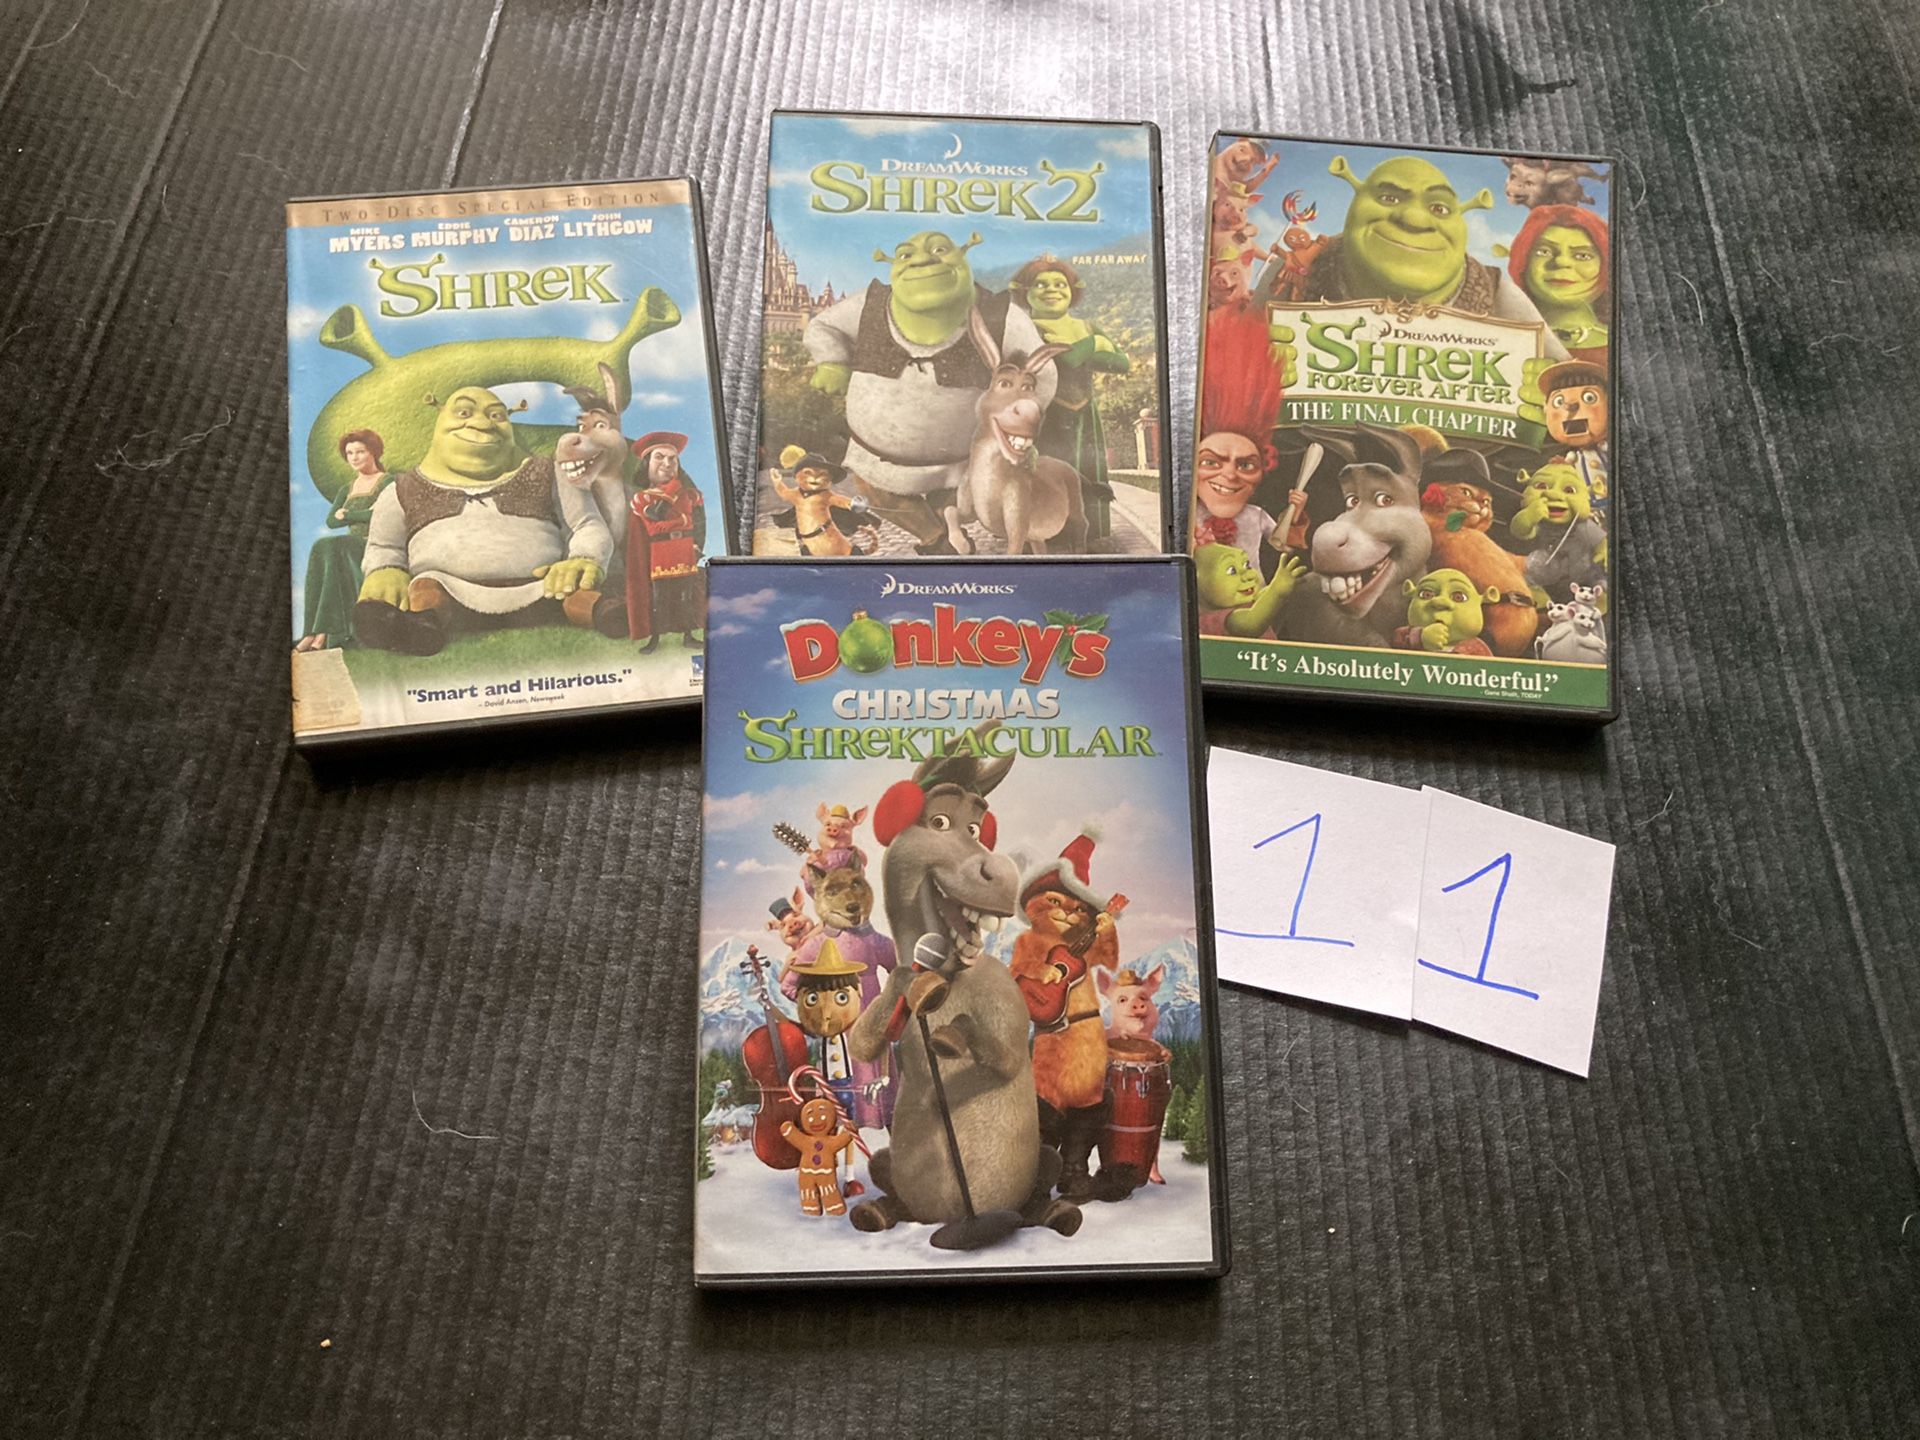 All 4 Shrek movies on DVD